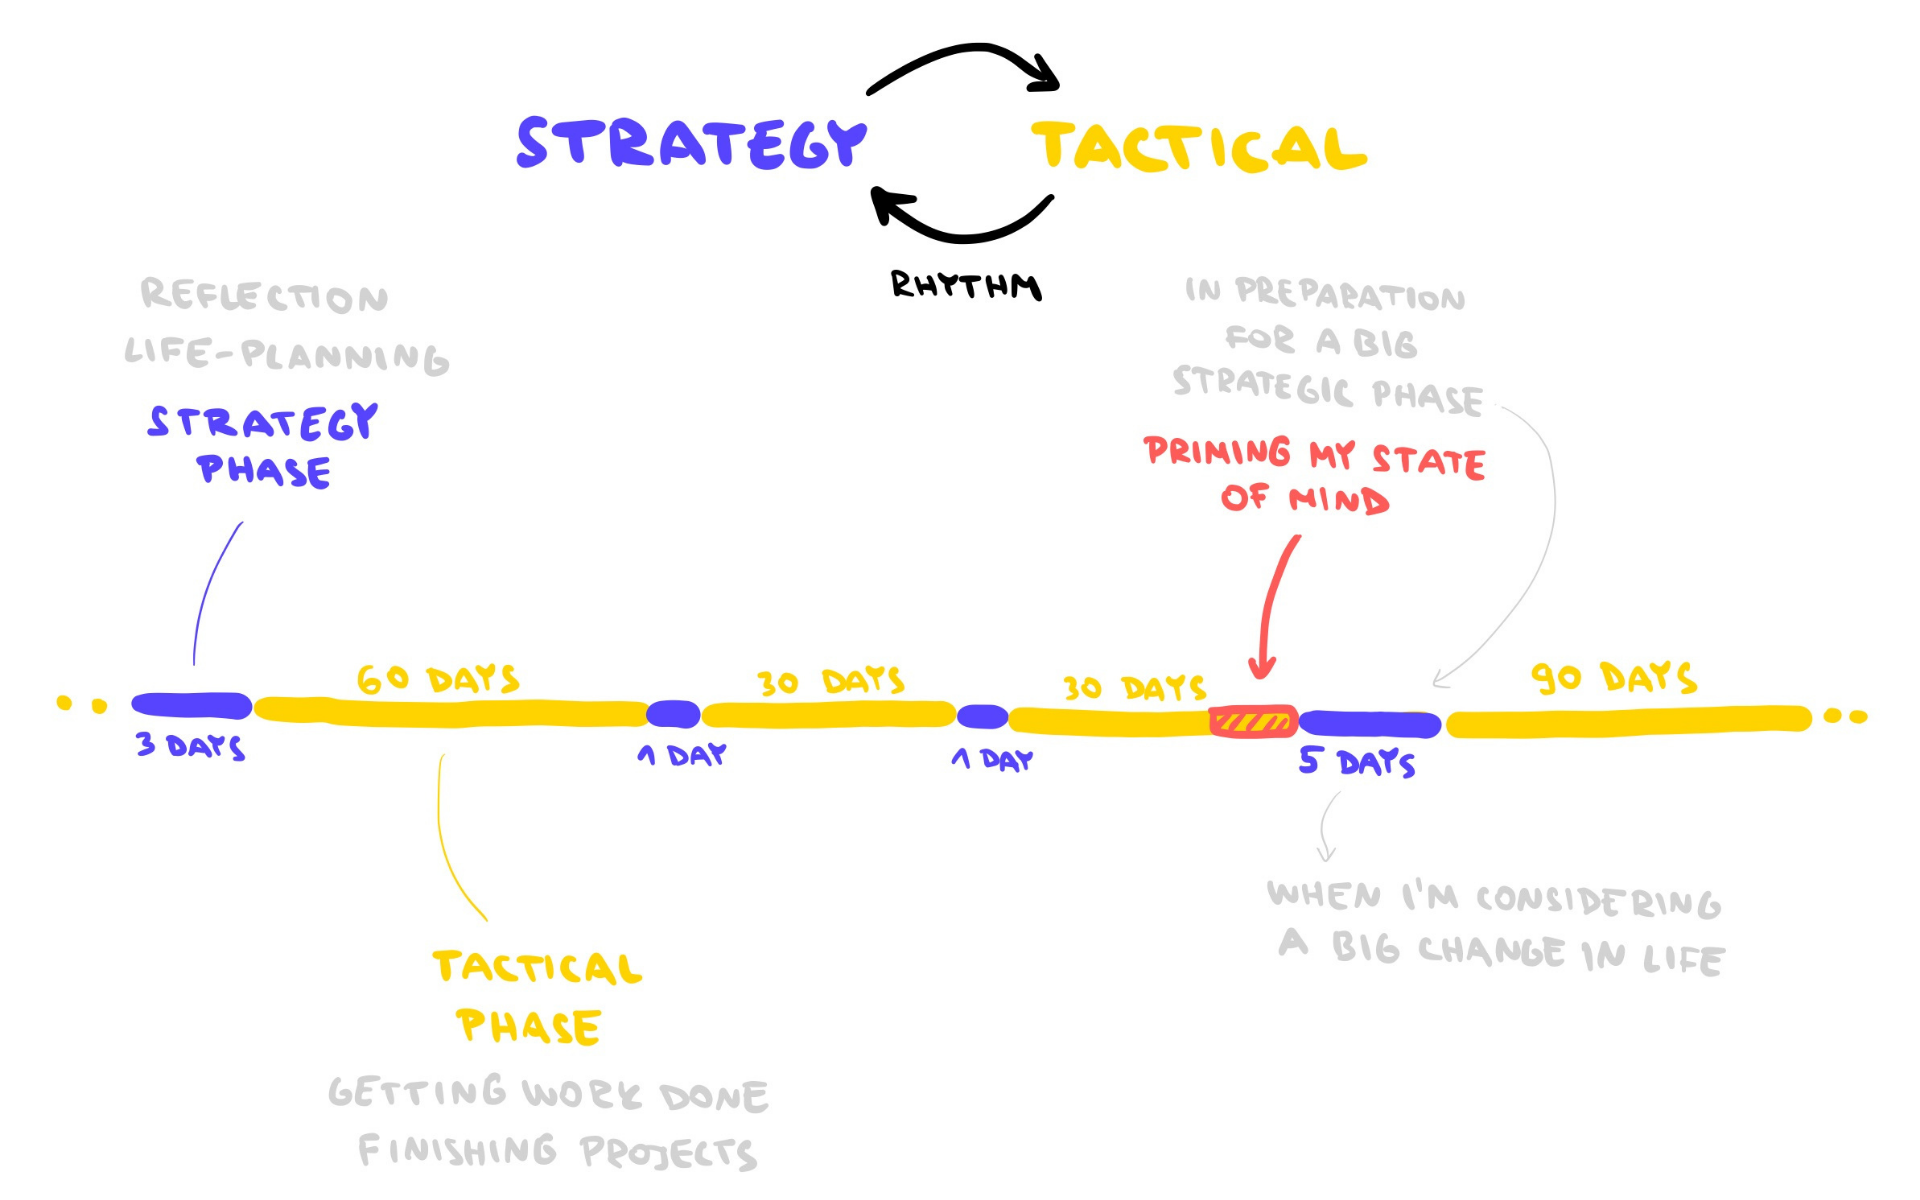 Strategy-Tactical Rhythm